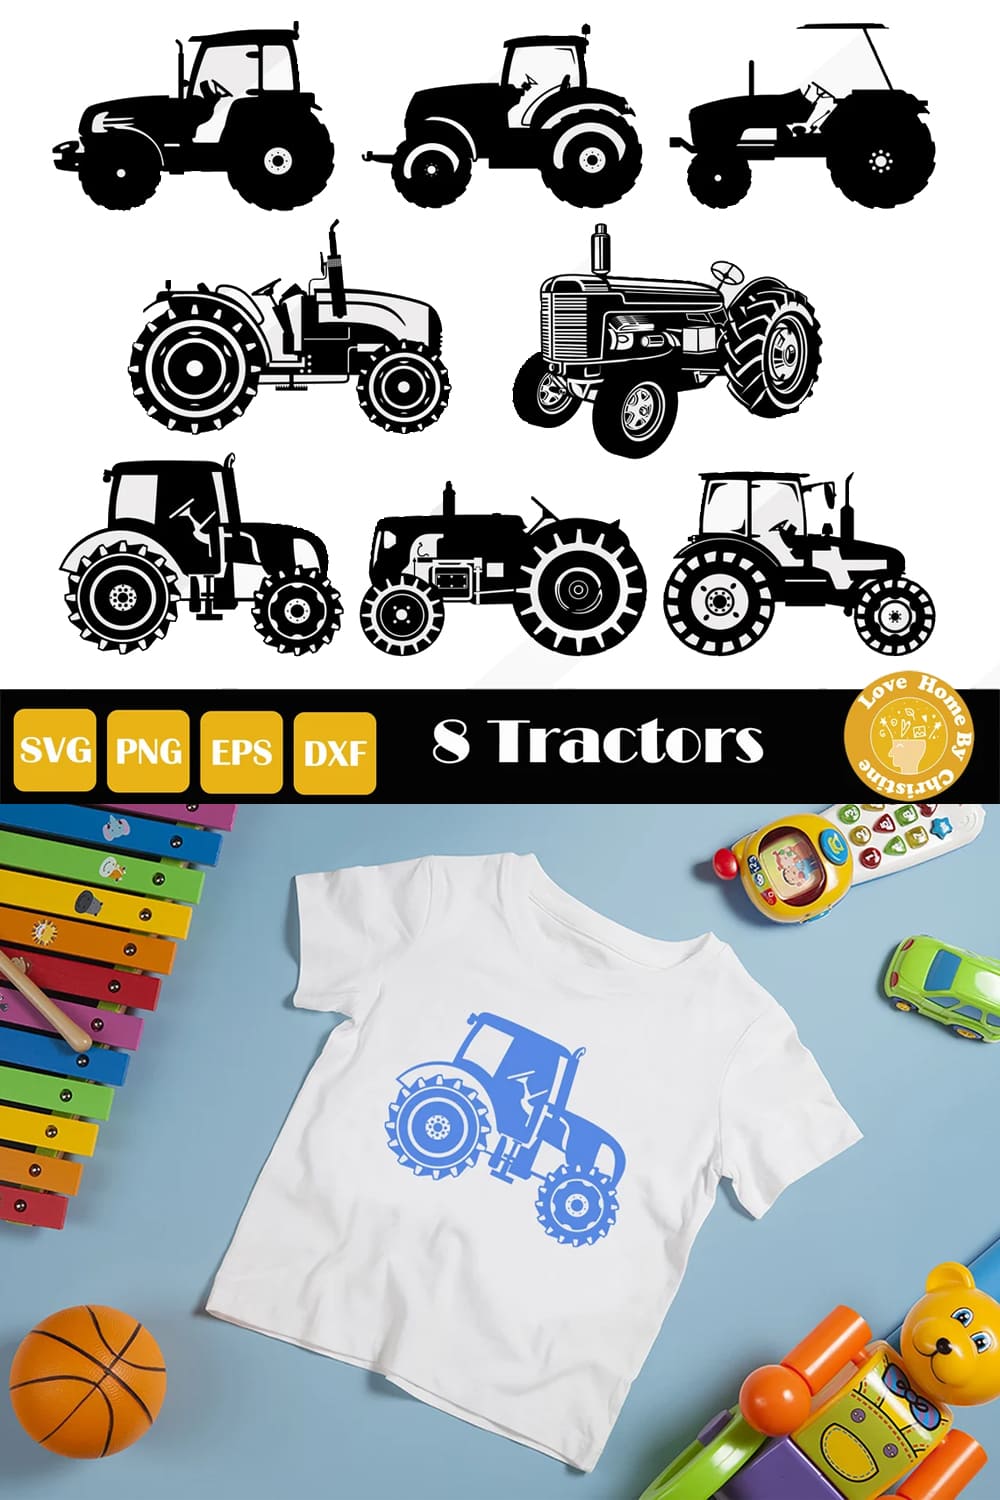 8 Farm Tractor SVG pinterest image.